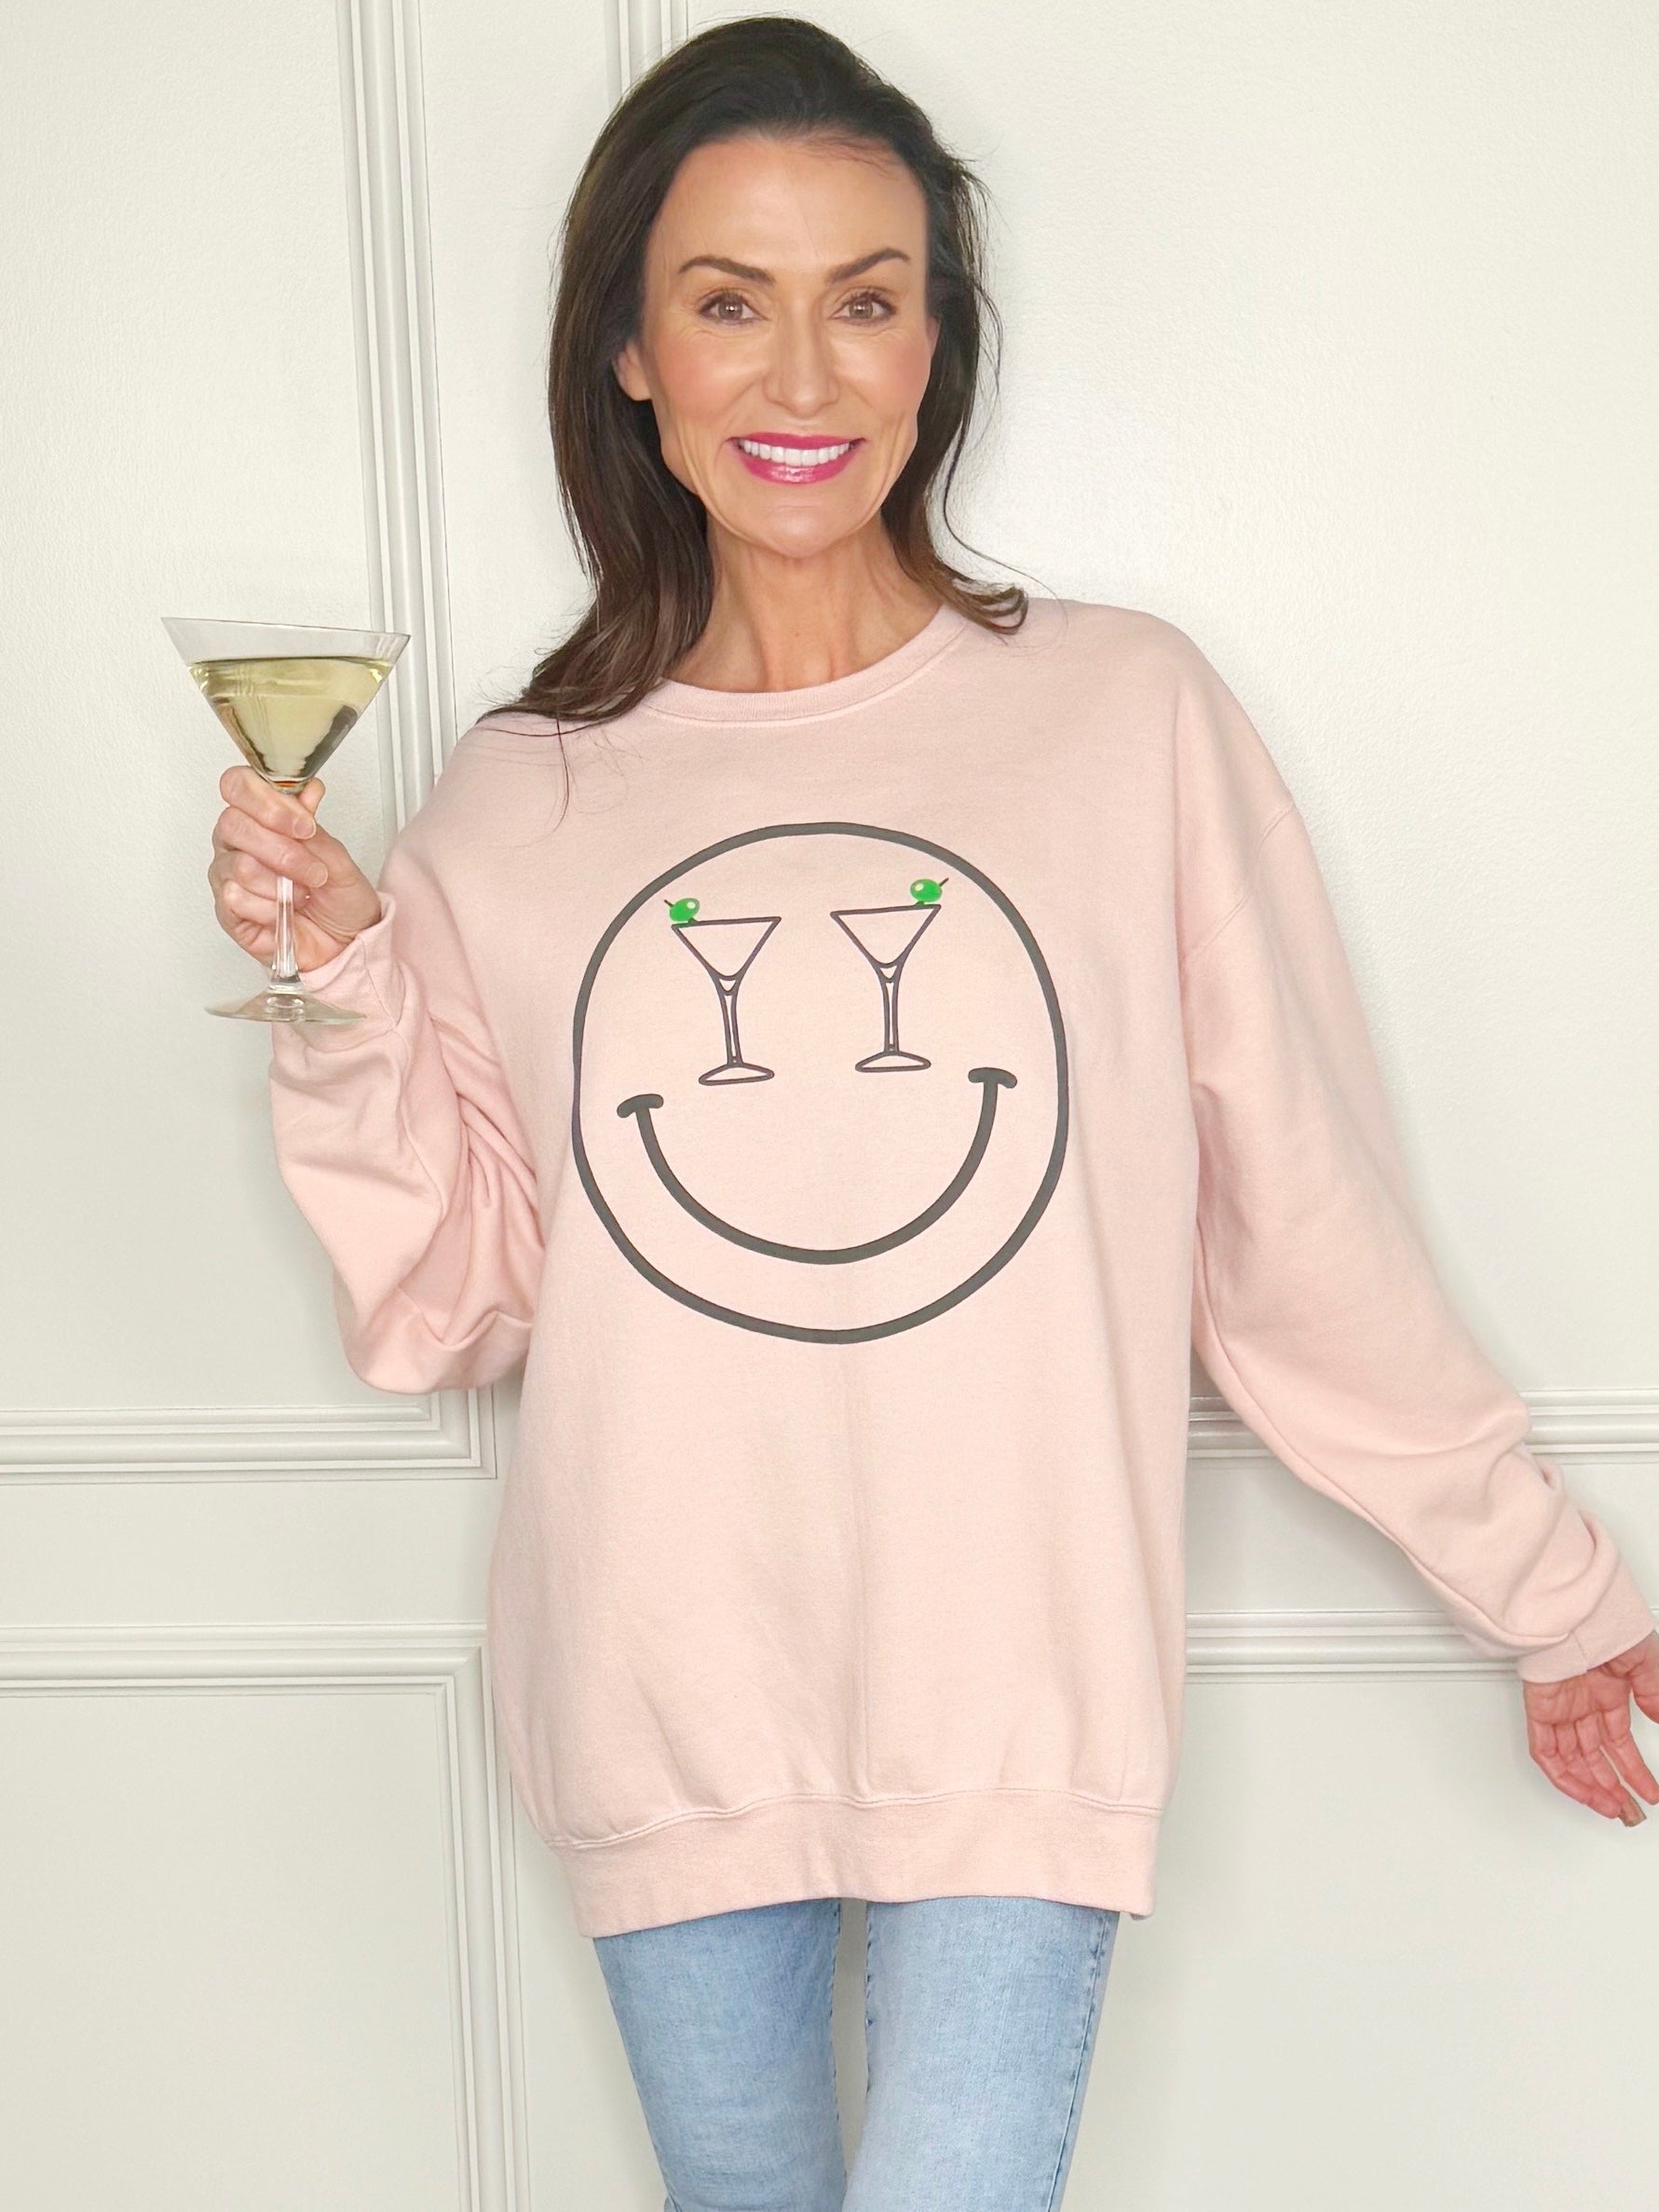 Puff Smiley Martini Sweatshirt